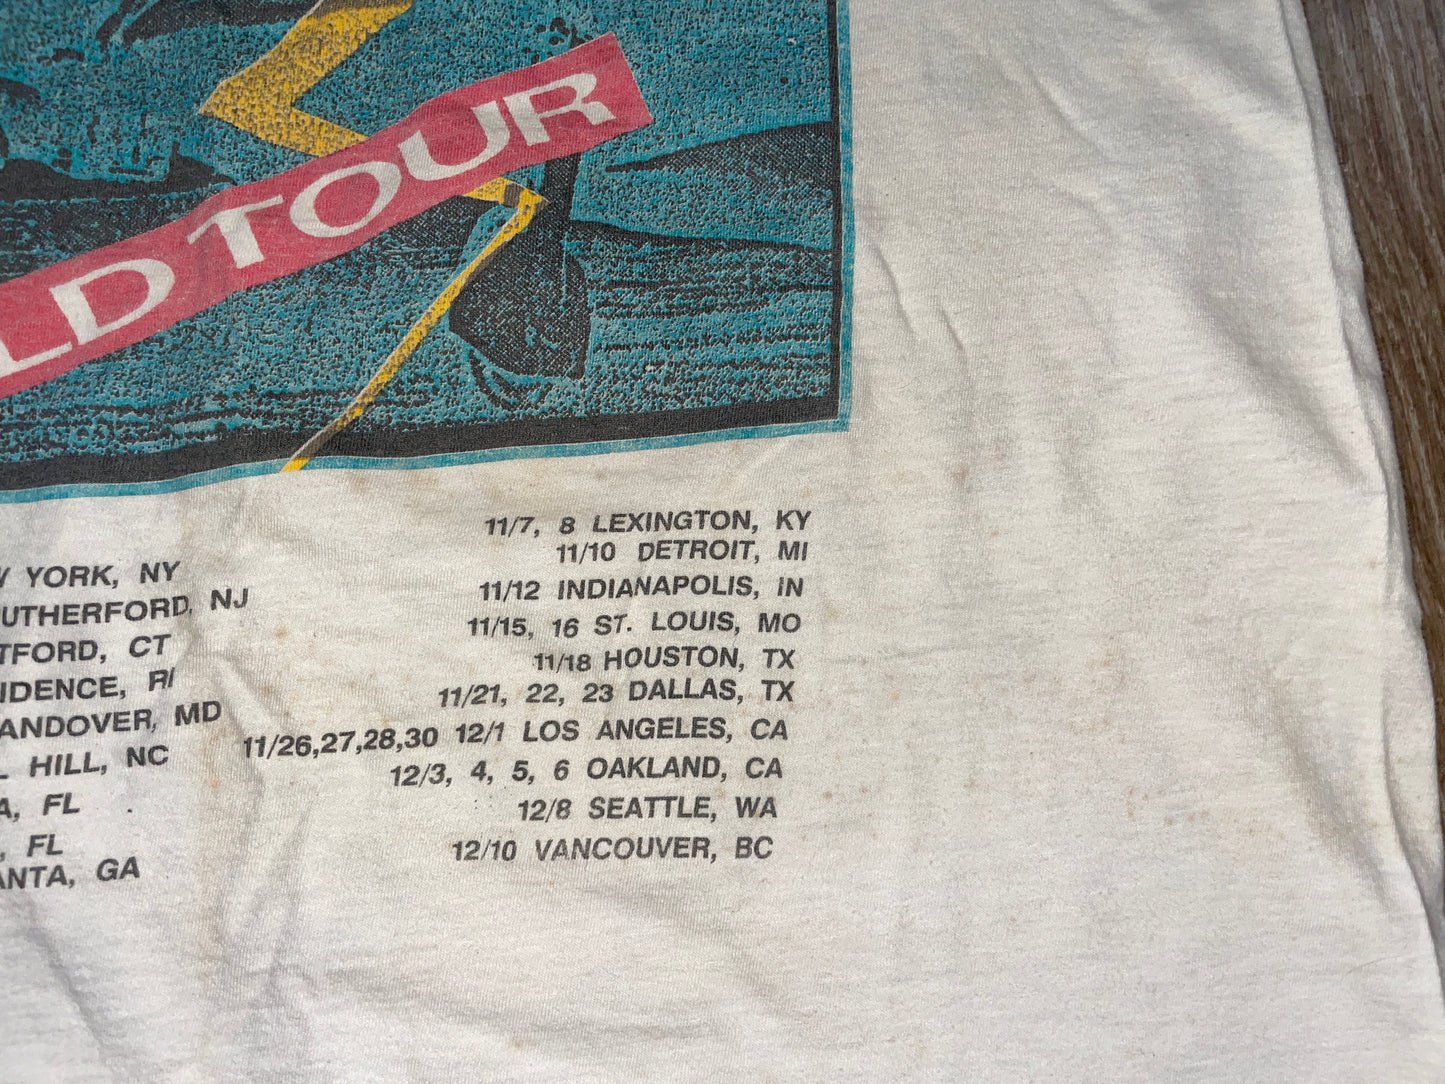 Vintage 1987 Pink Floyd World Tour T-Shirt